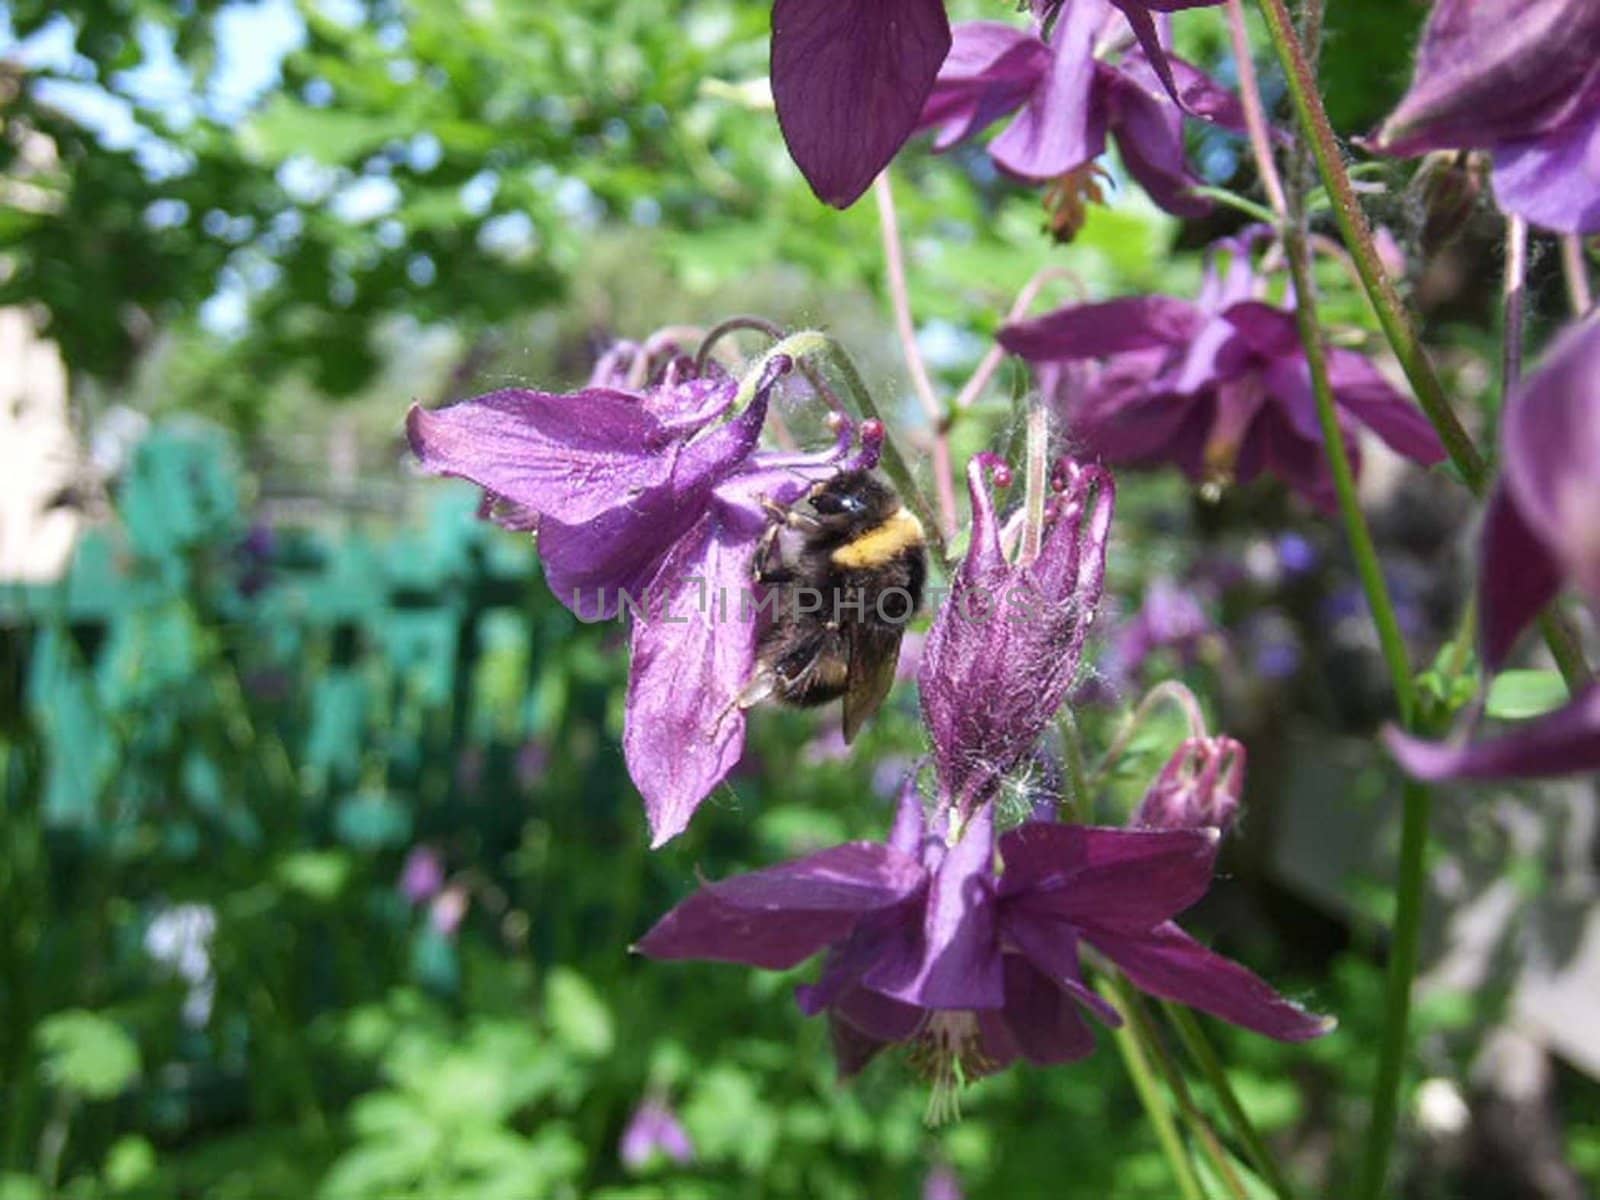 Bumblebee on a flower. Macroshooting.